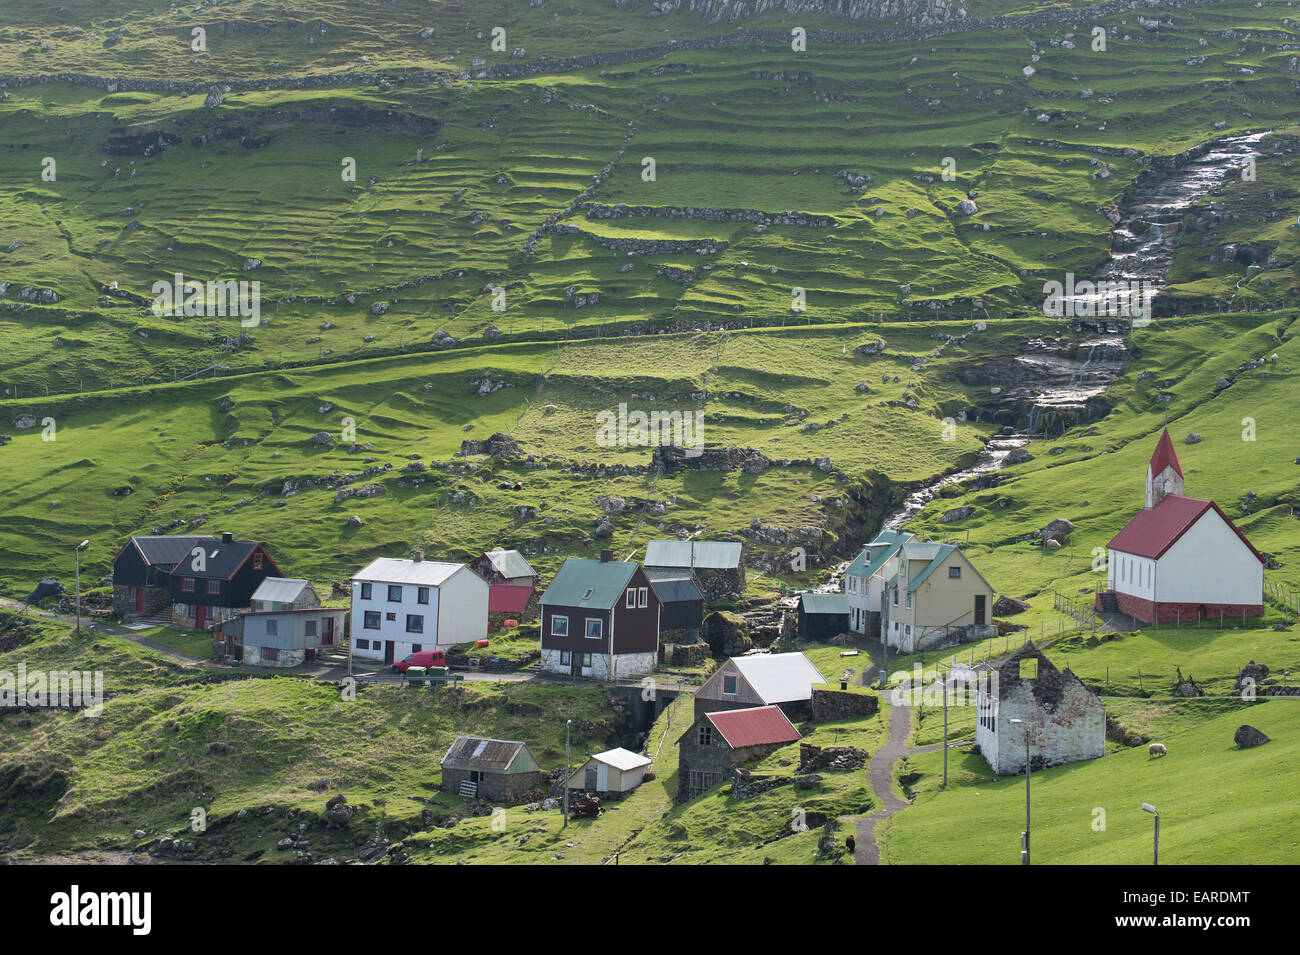 Pasture and creek, village threatened by depopulation, Hattarvík, Fugloy, Norðoyar, Faroe Islands, Denmark Stock Photo